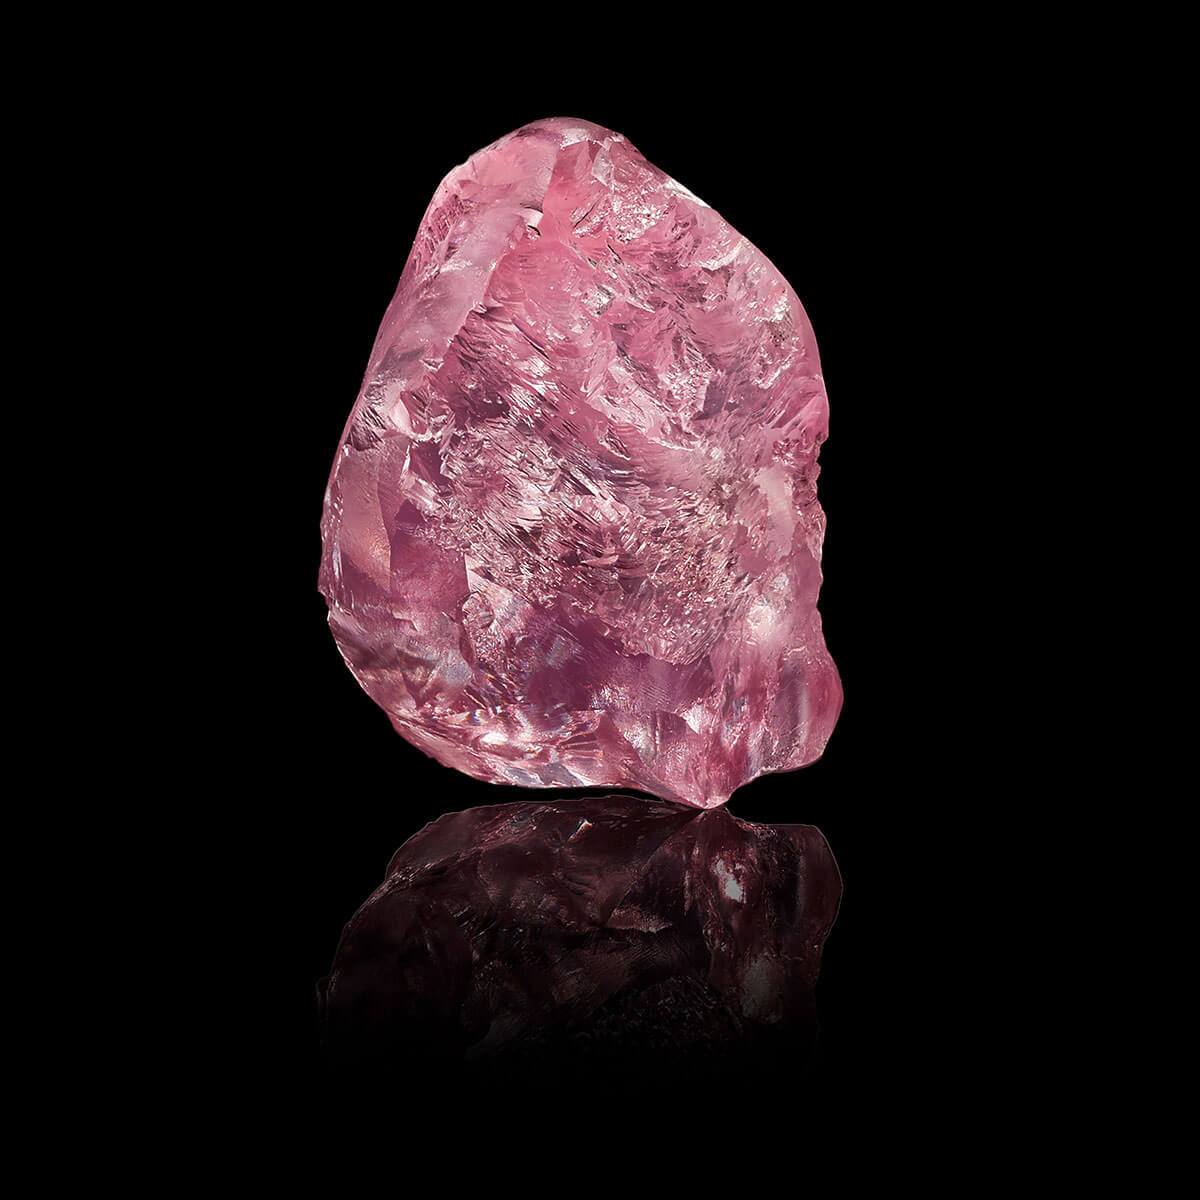 13.33 carat pink rough stone of the Graff Lesotho Pink Diamond